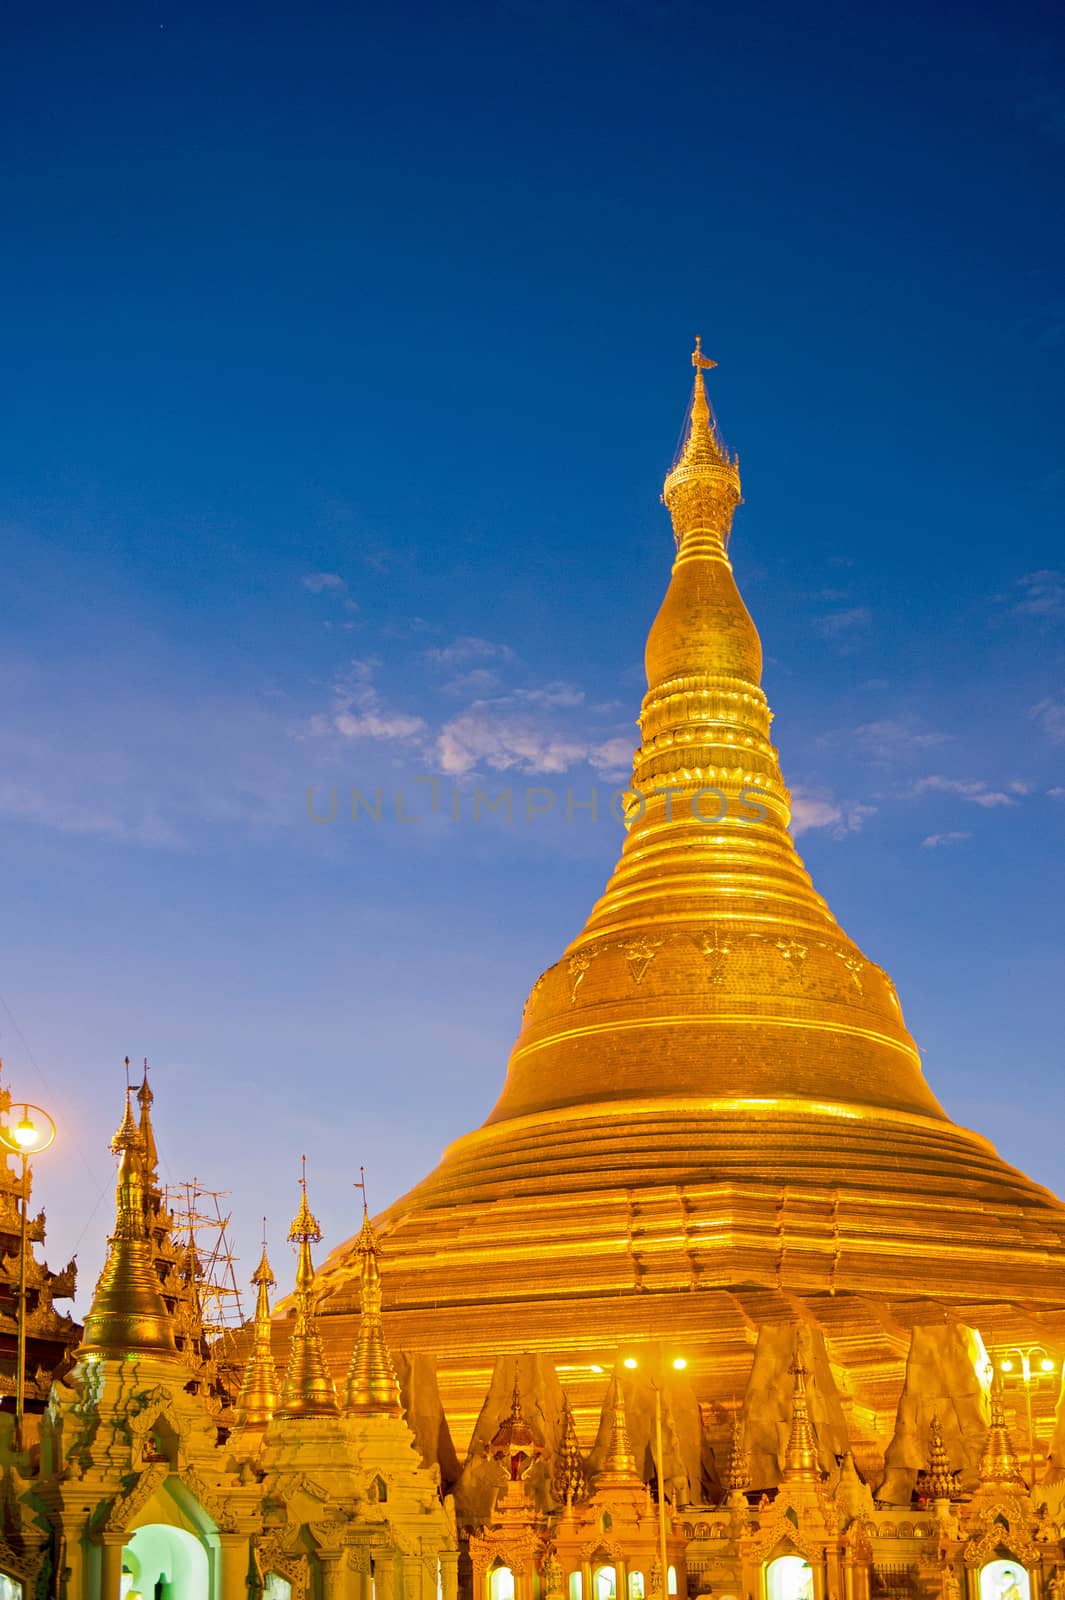 atmosphere of dawn at Shwedagon pagoda in Yagon, Myanmar